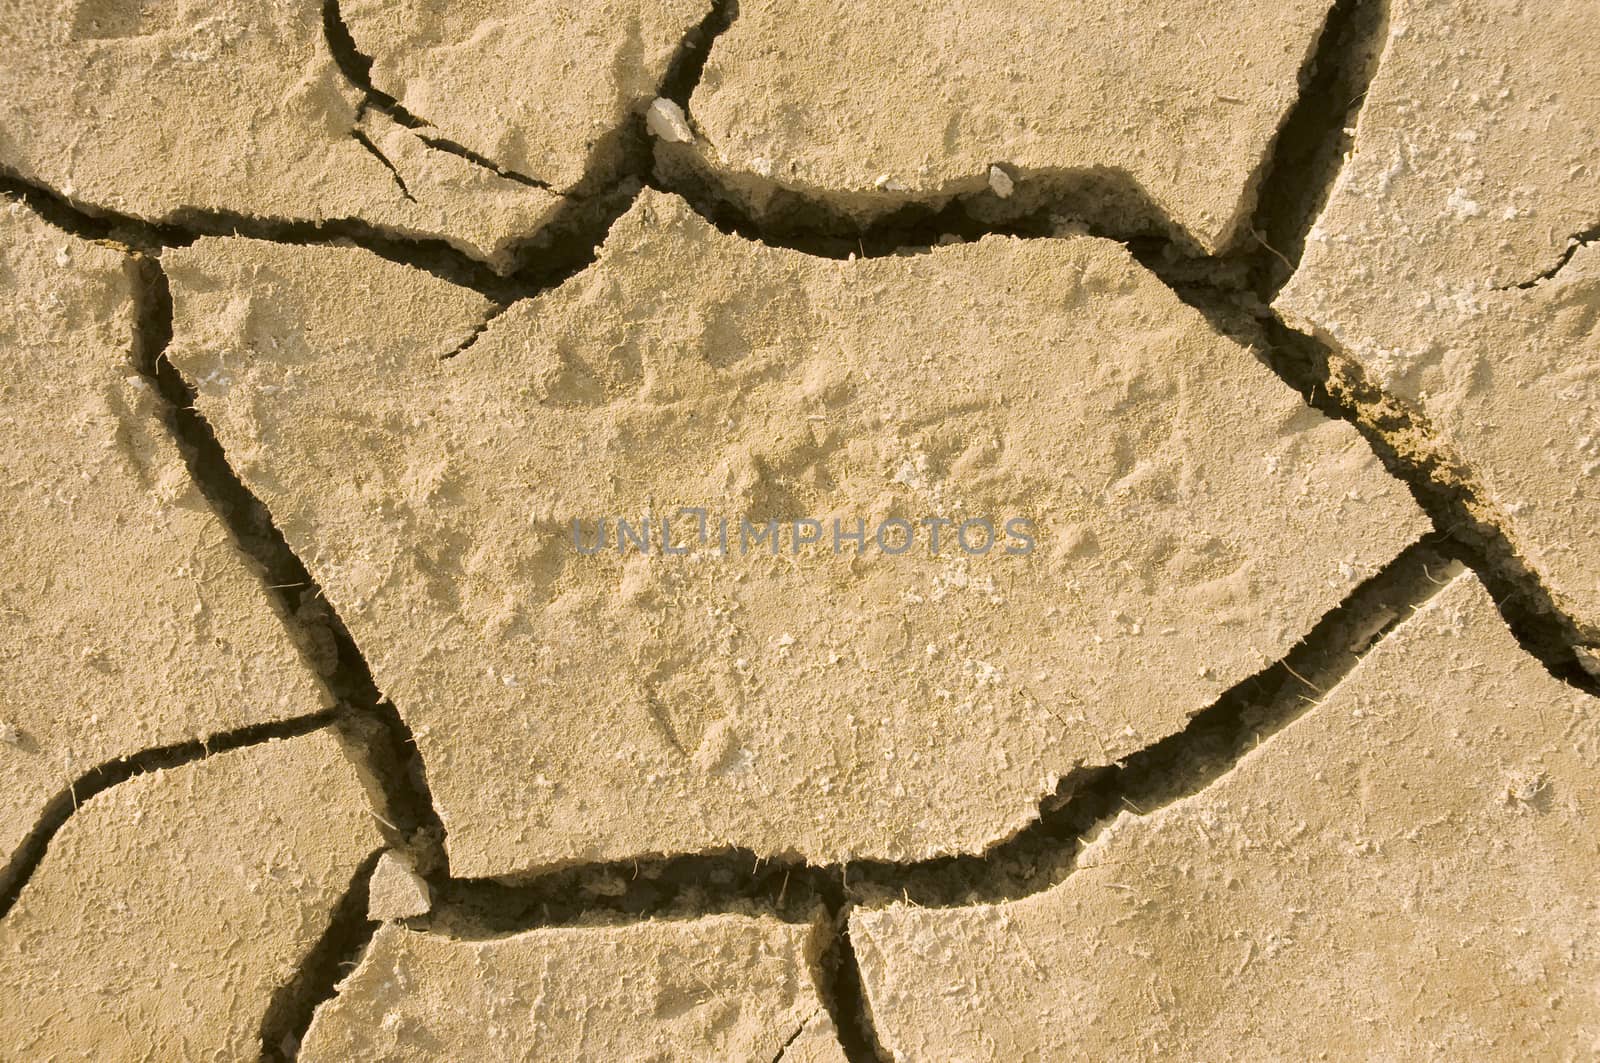 Animal footprints in dried earth